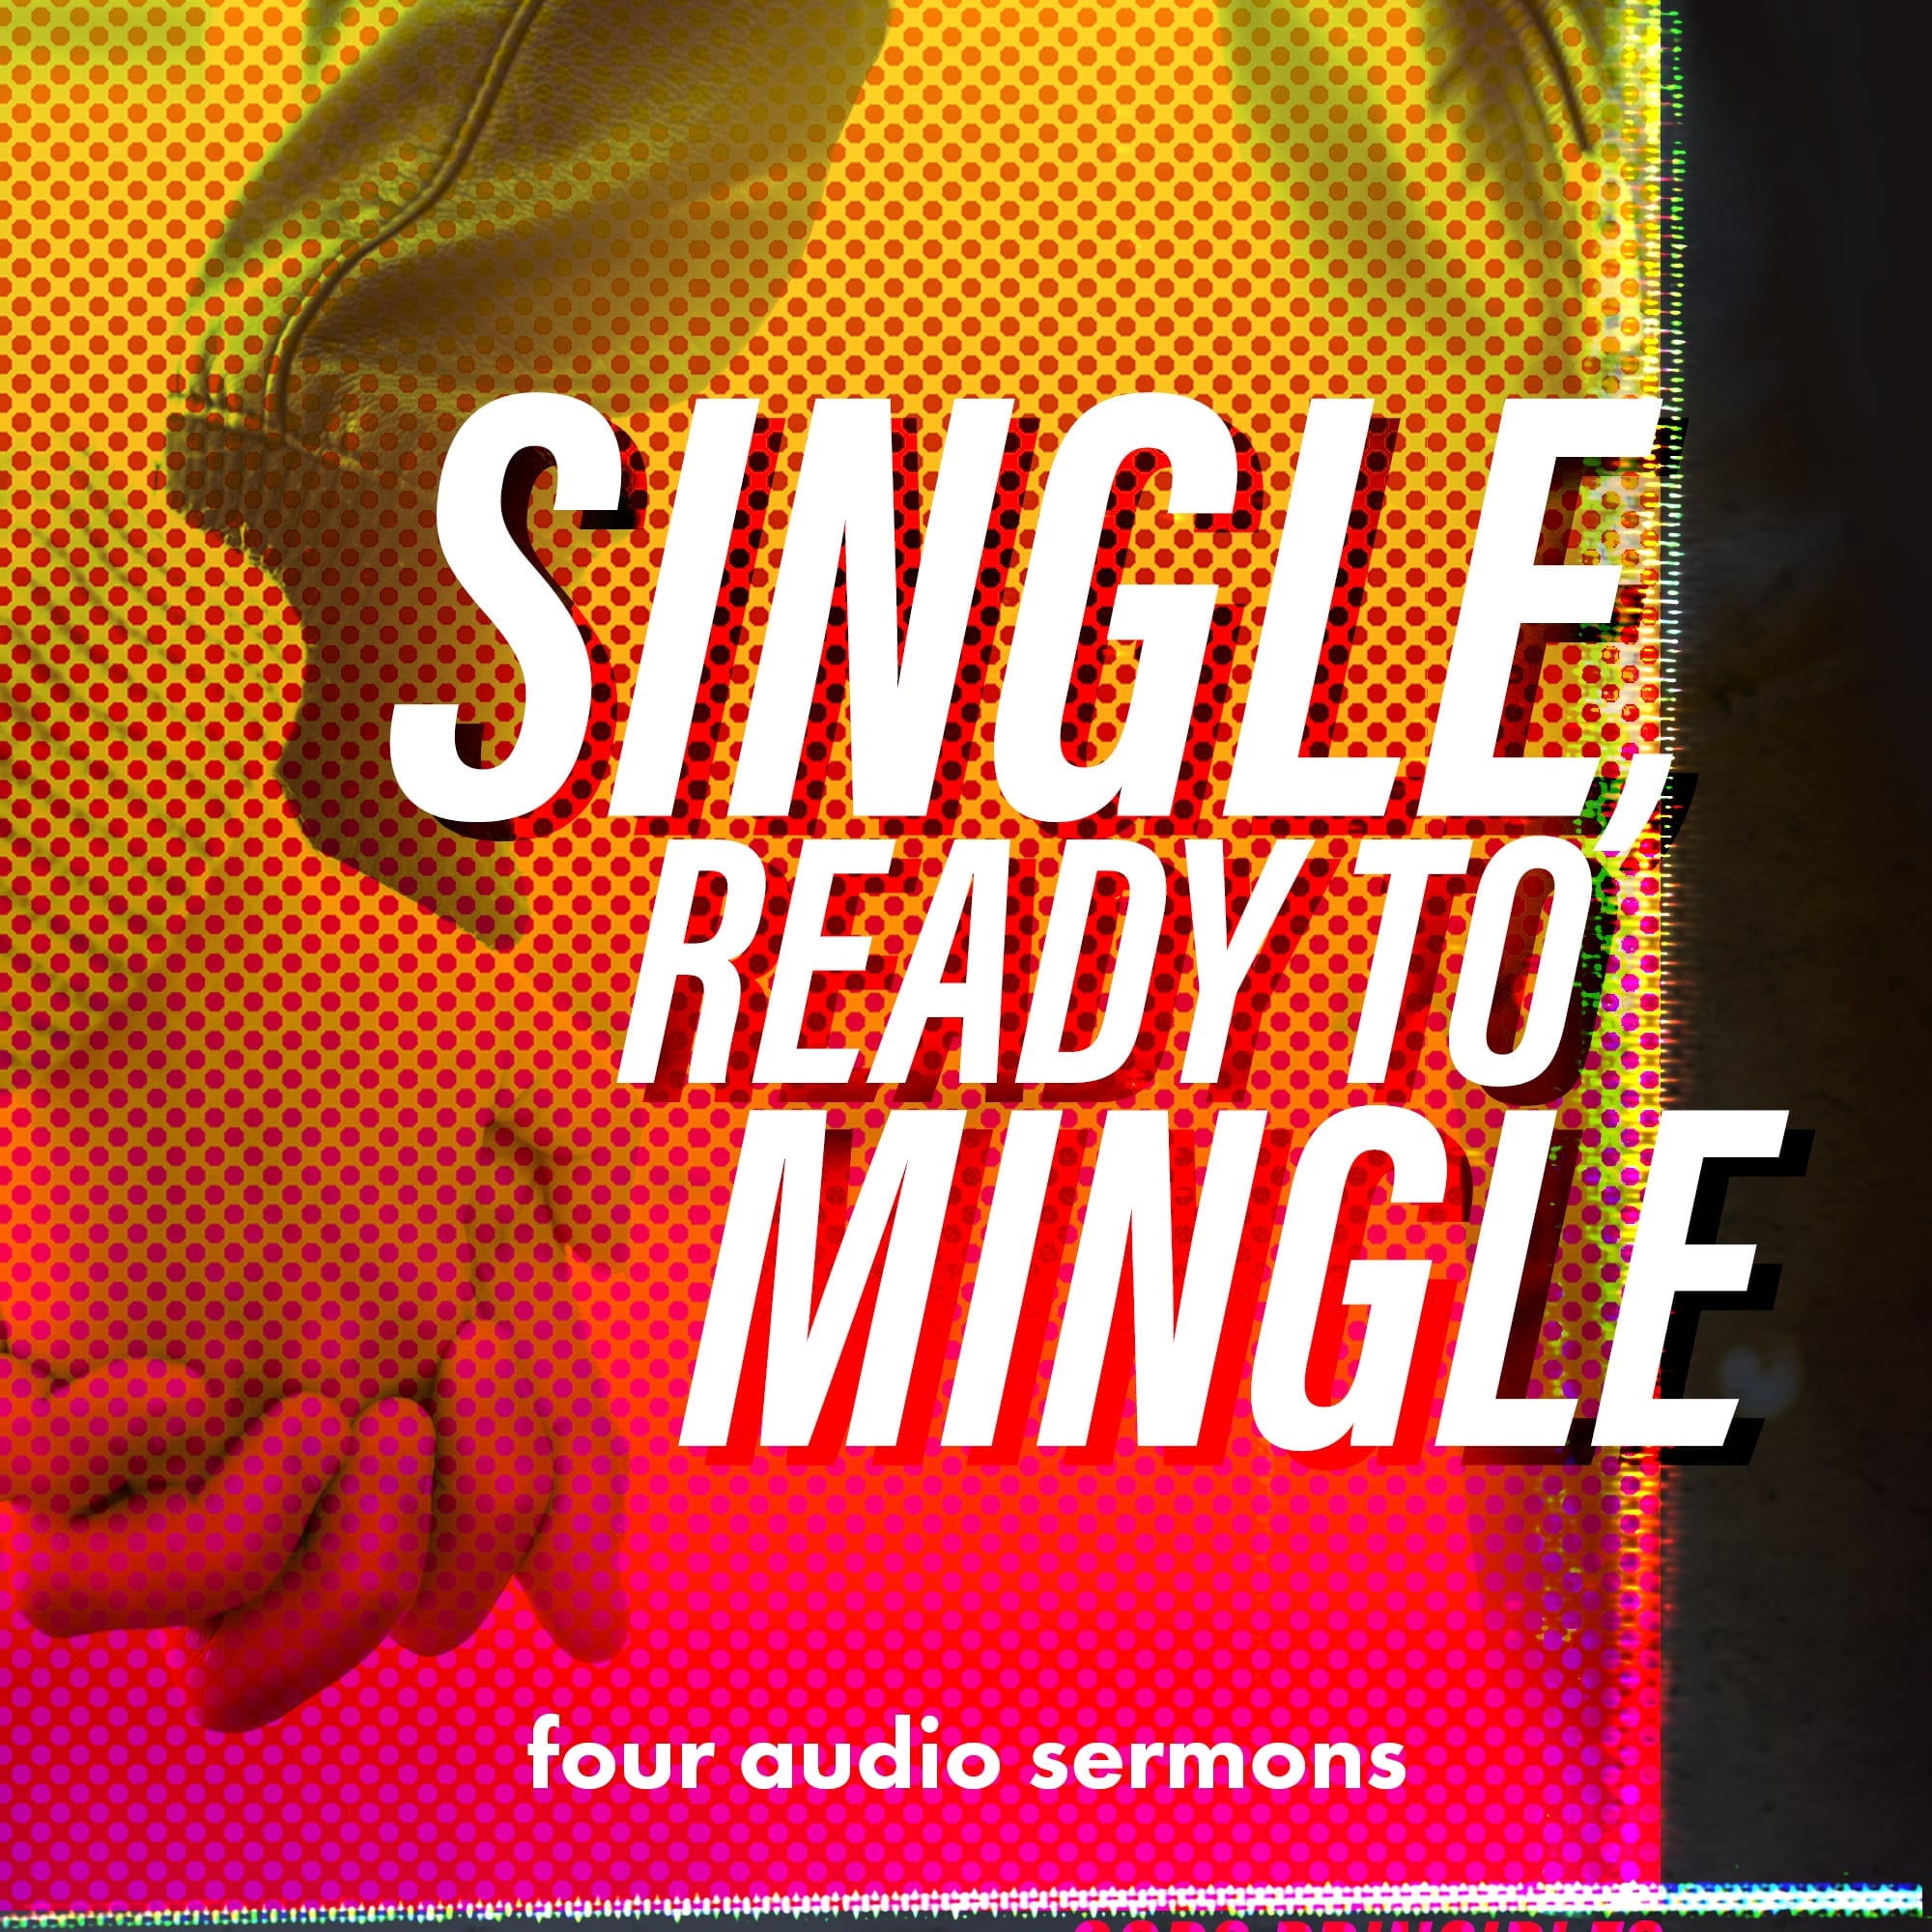 Series: Single, Ready to Mingle